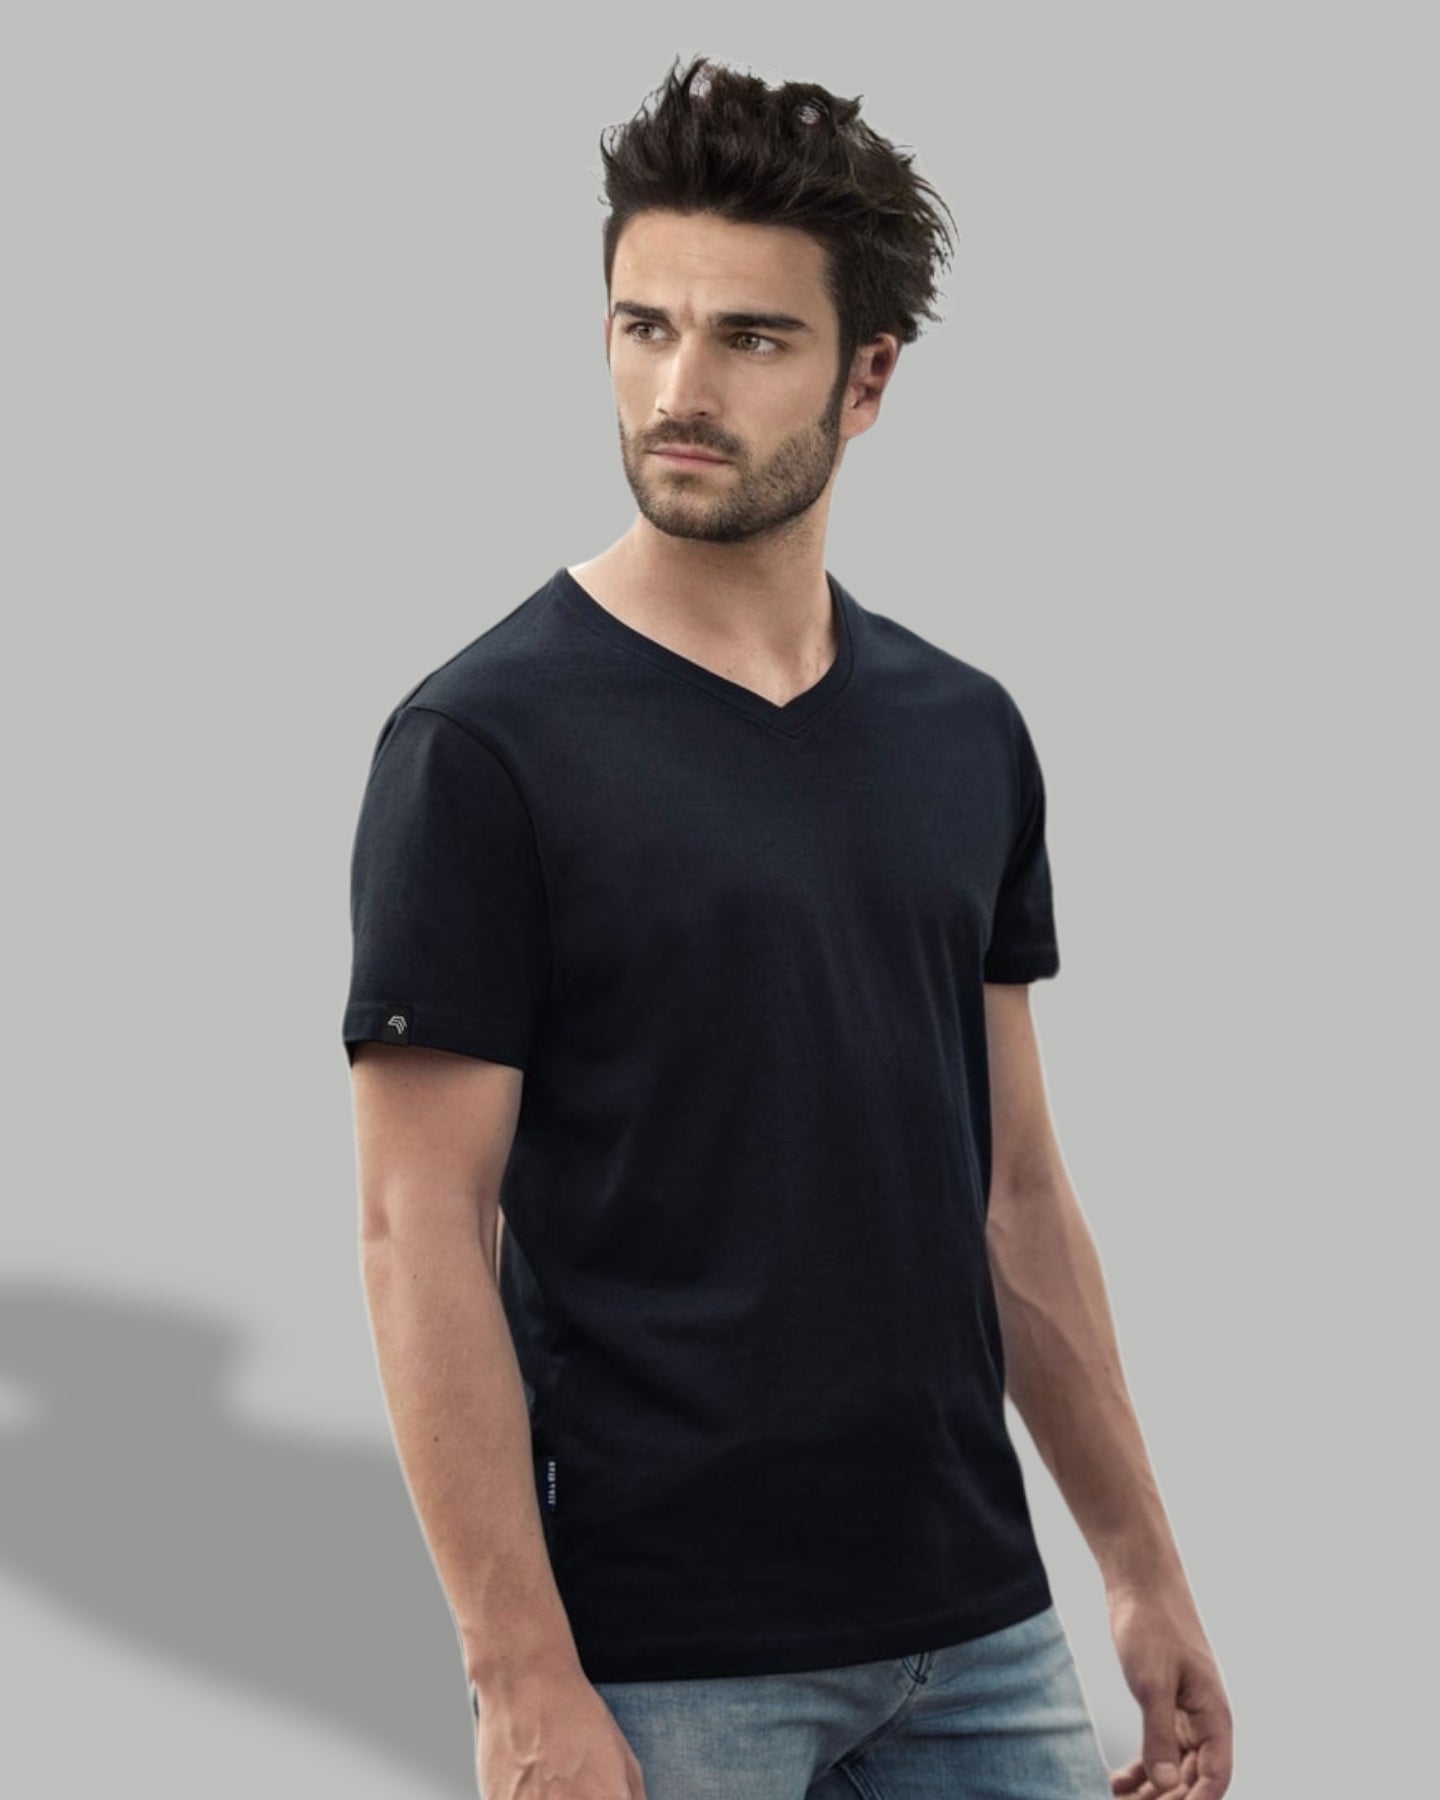 RMH 0102 ― Herren Luxury Bio-Baumwolle V-Neck T-Shirt - Royal Blau